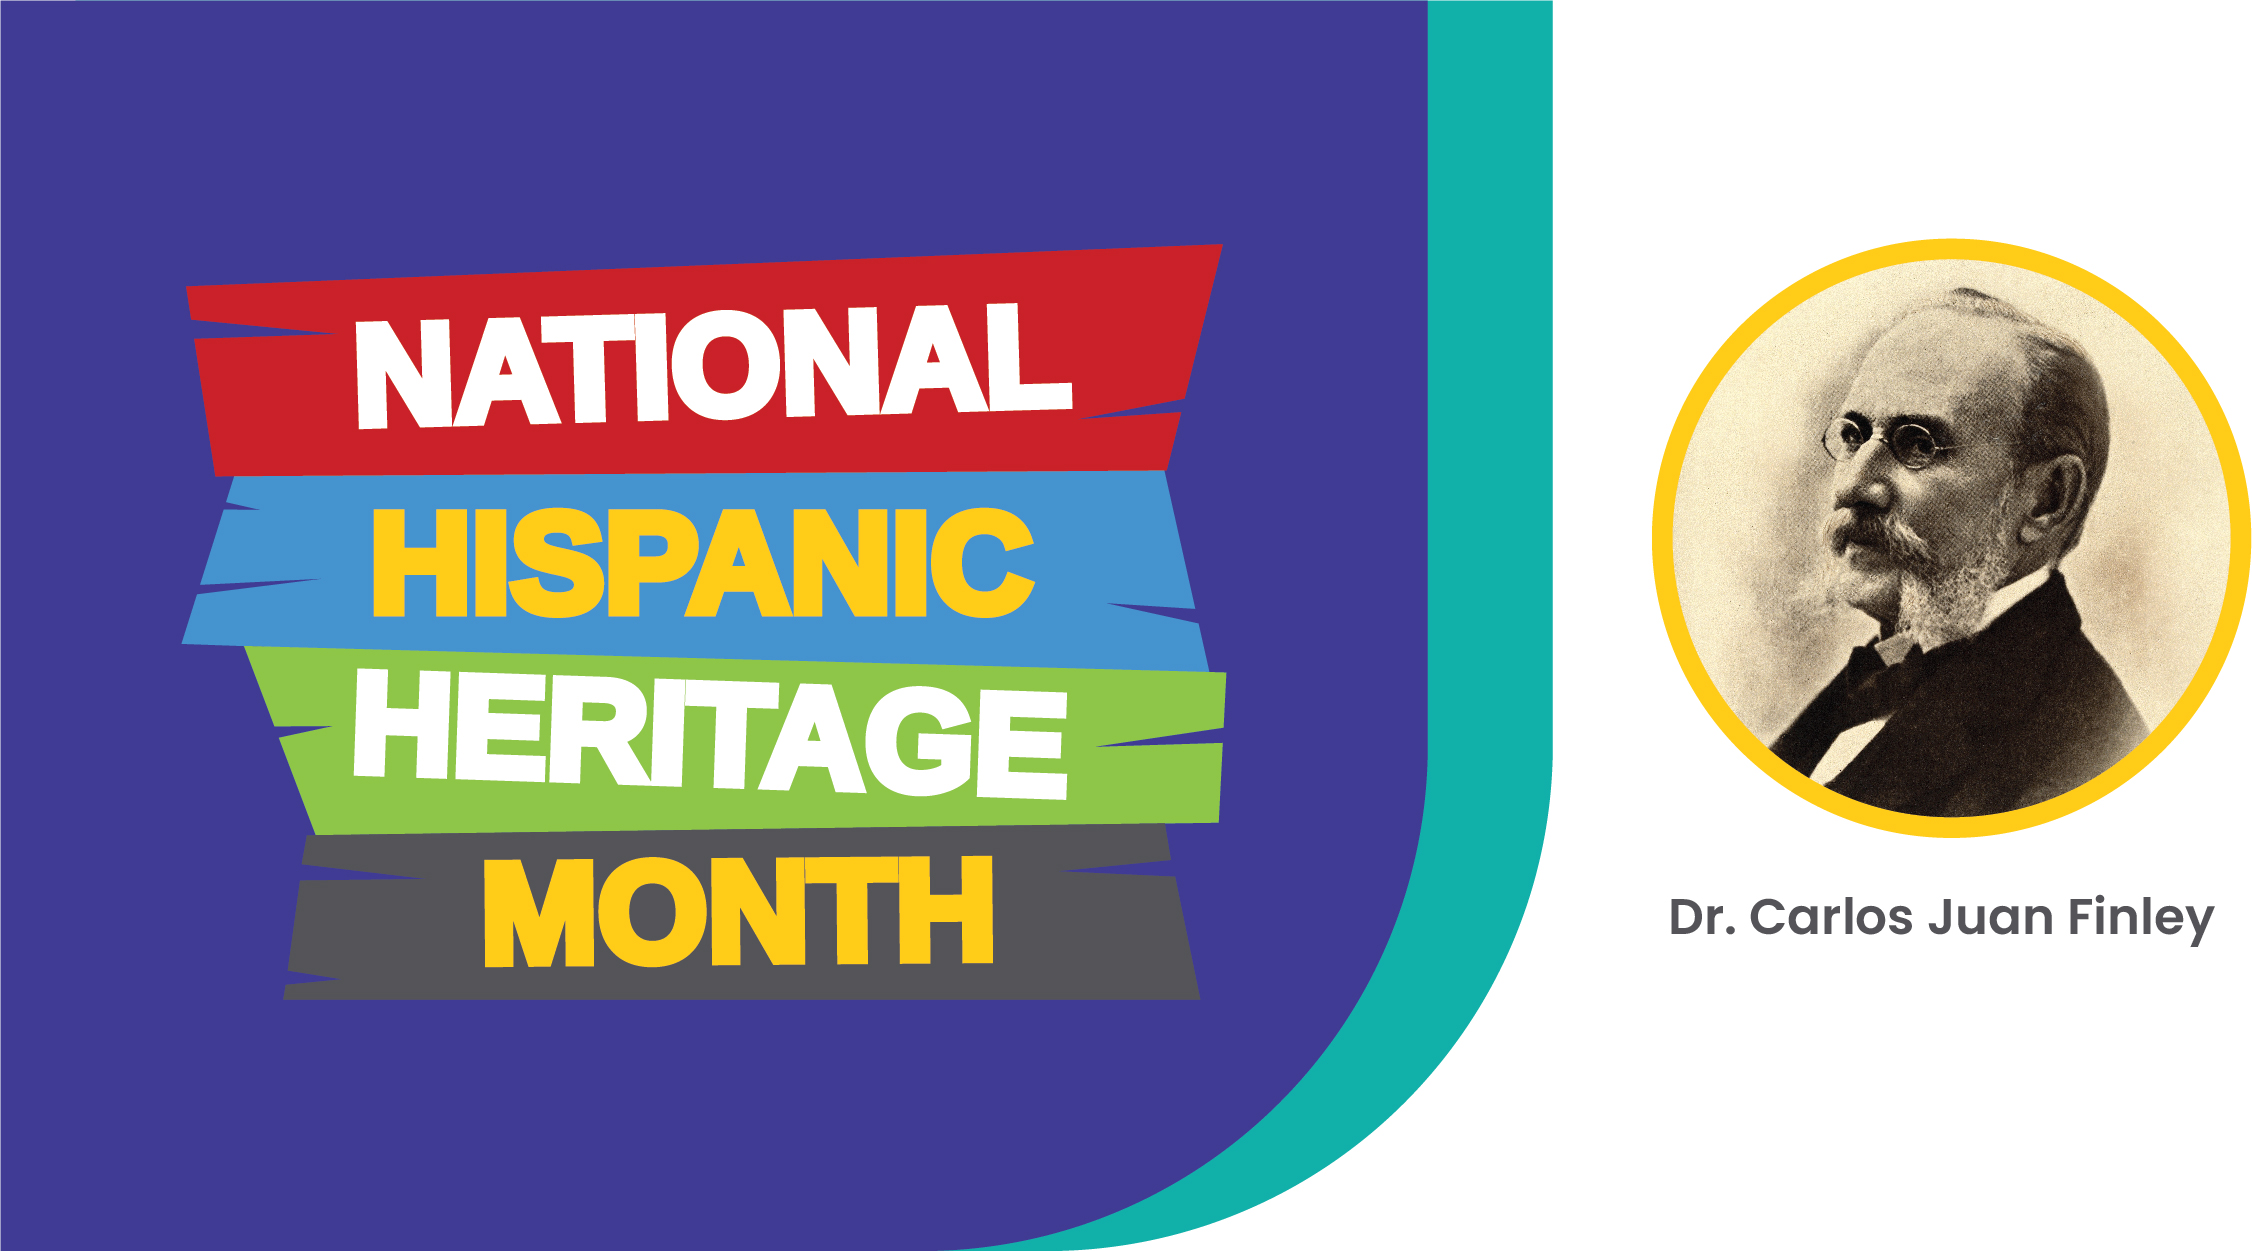 National_Hispanic_Heritage_Month 9.15.jpg